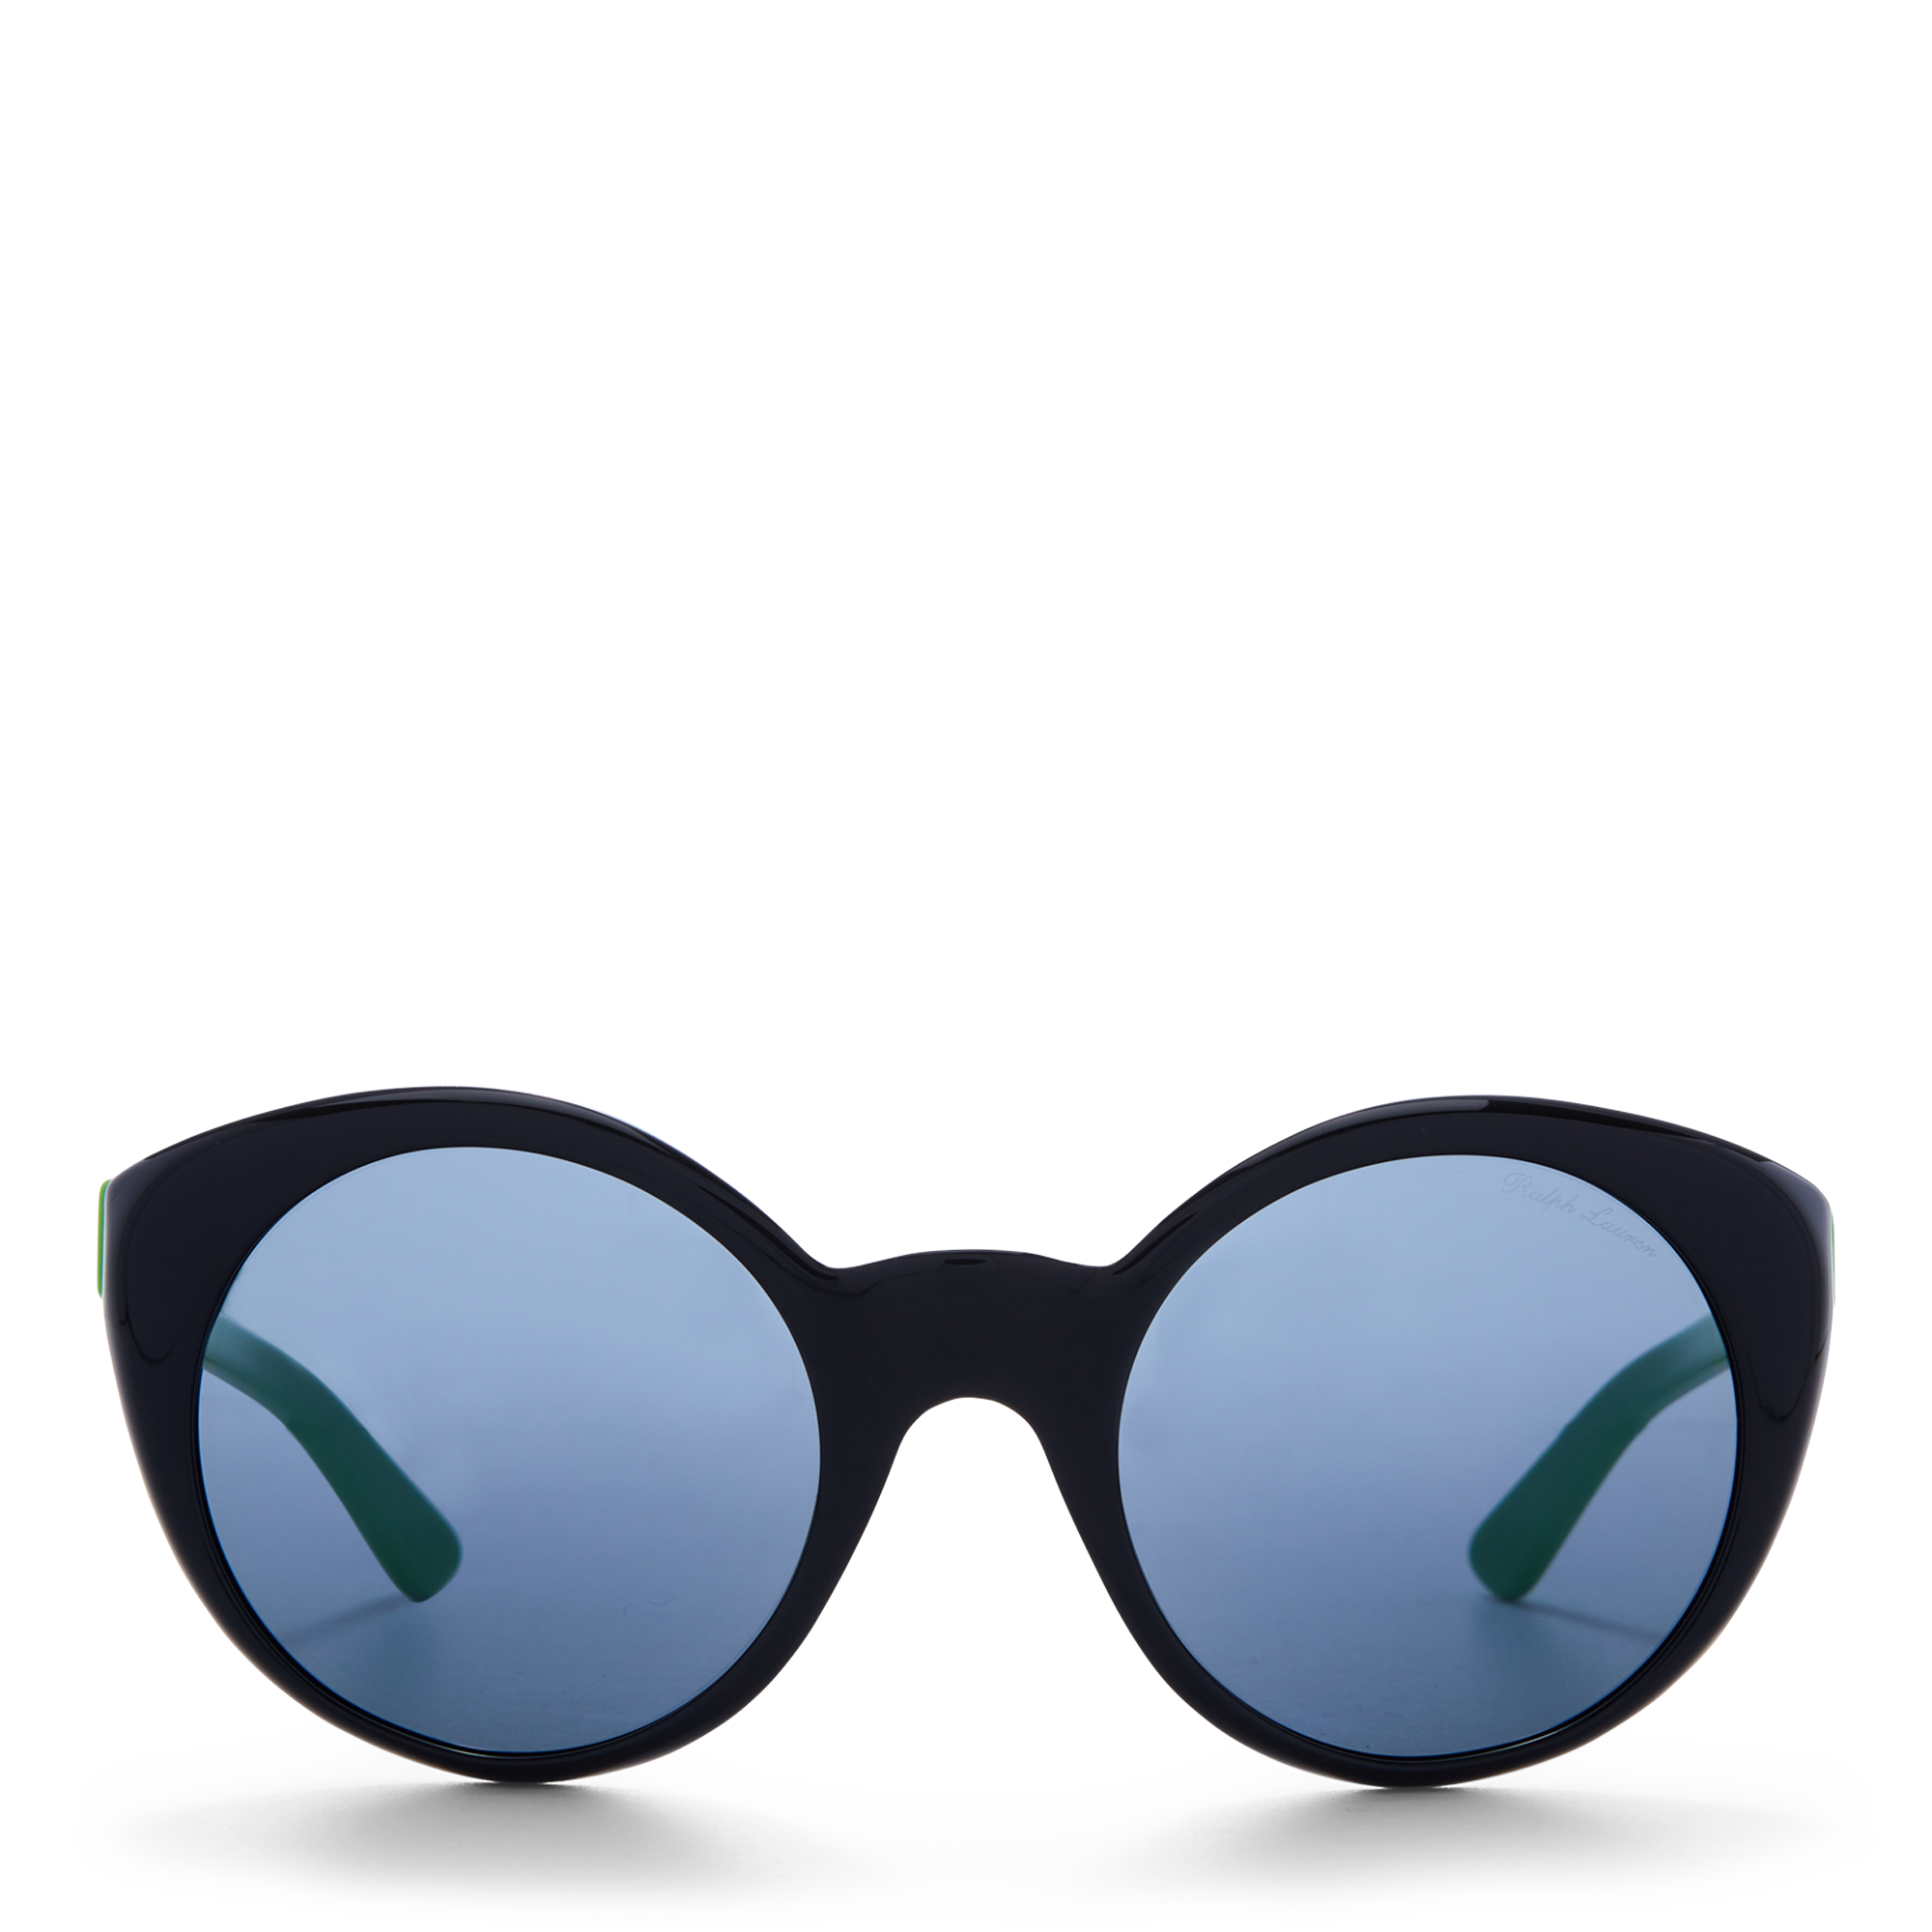 Ralph Lauren Round Sunglasses. 1